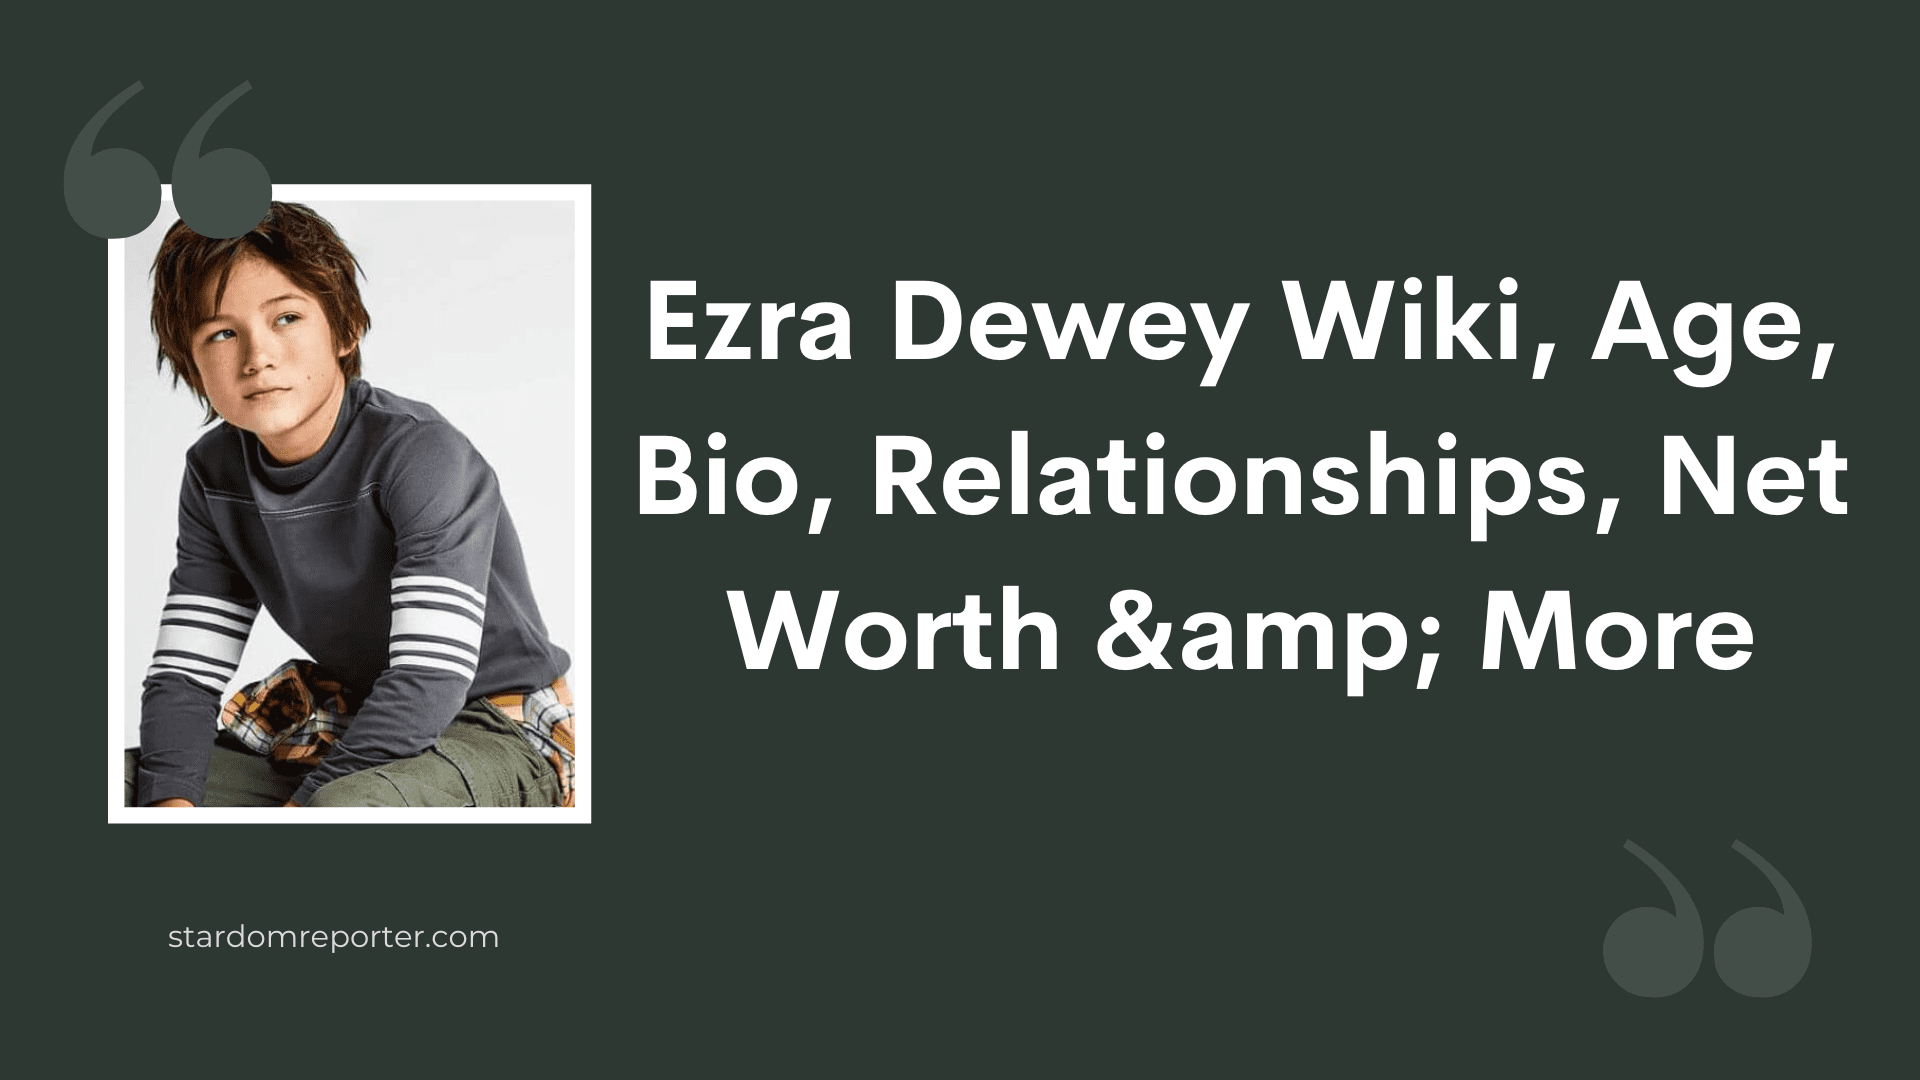 Ezra Dewey Wiki, Age, Bio, Relationships, Net Worth & More - 17